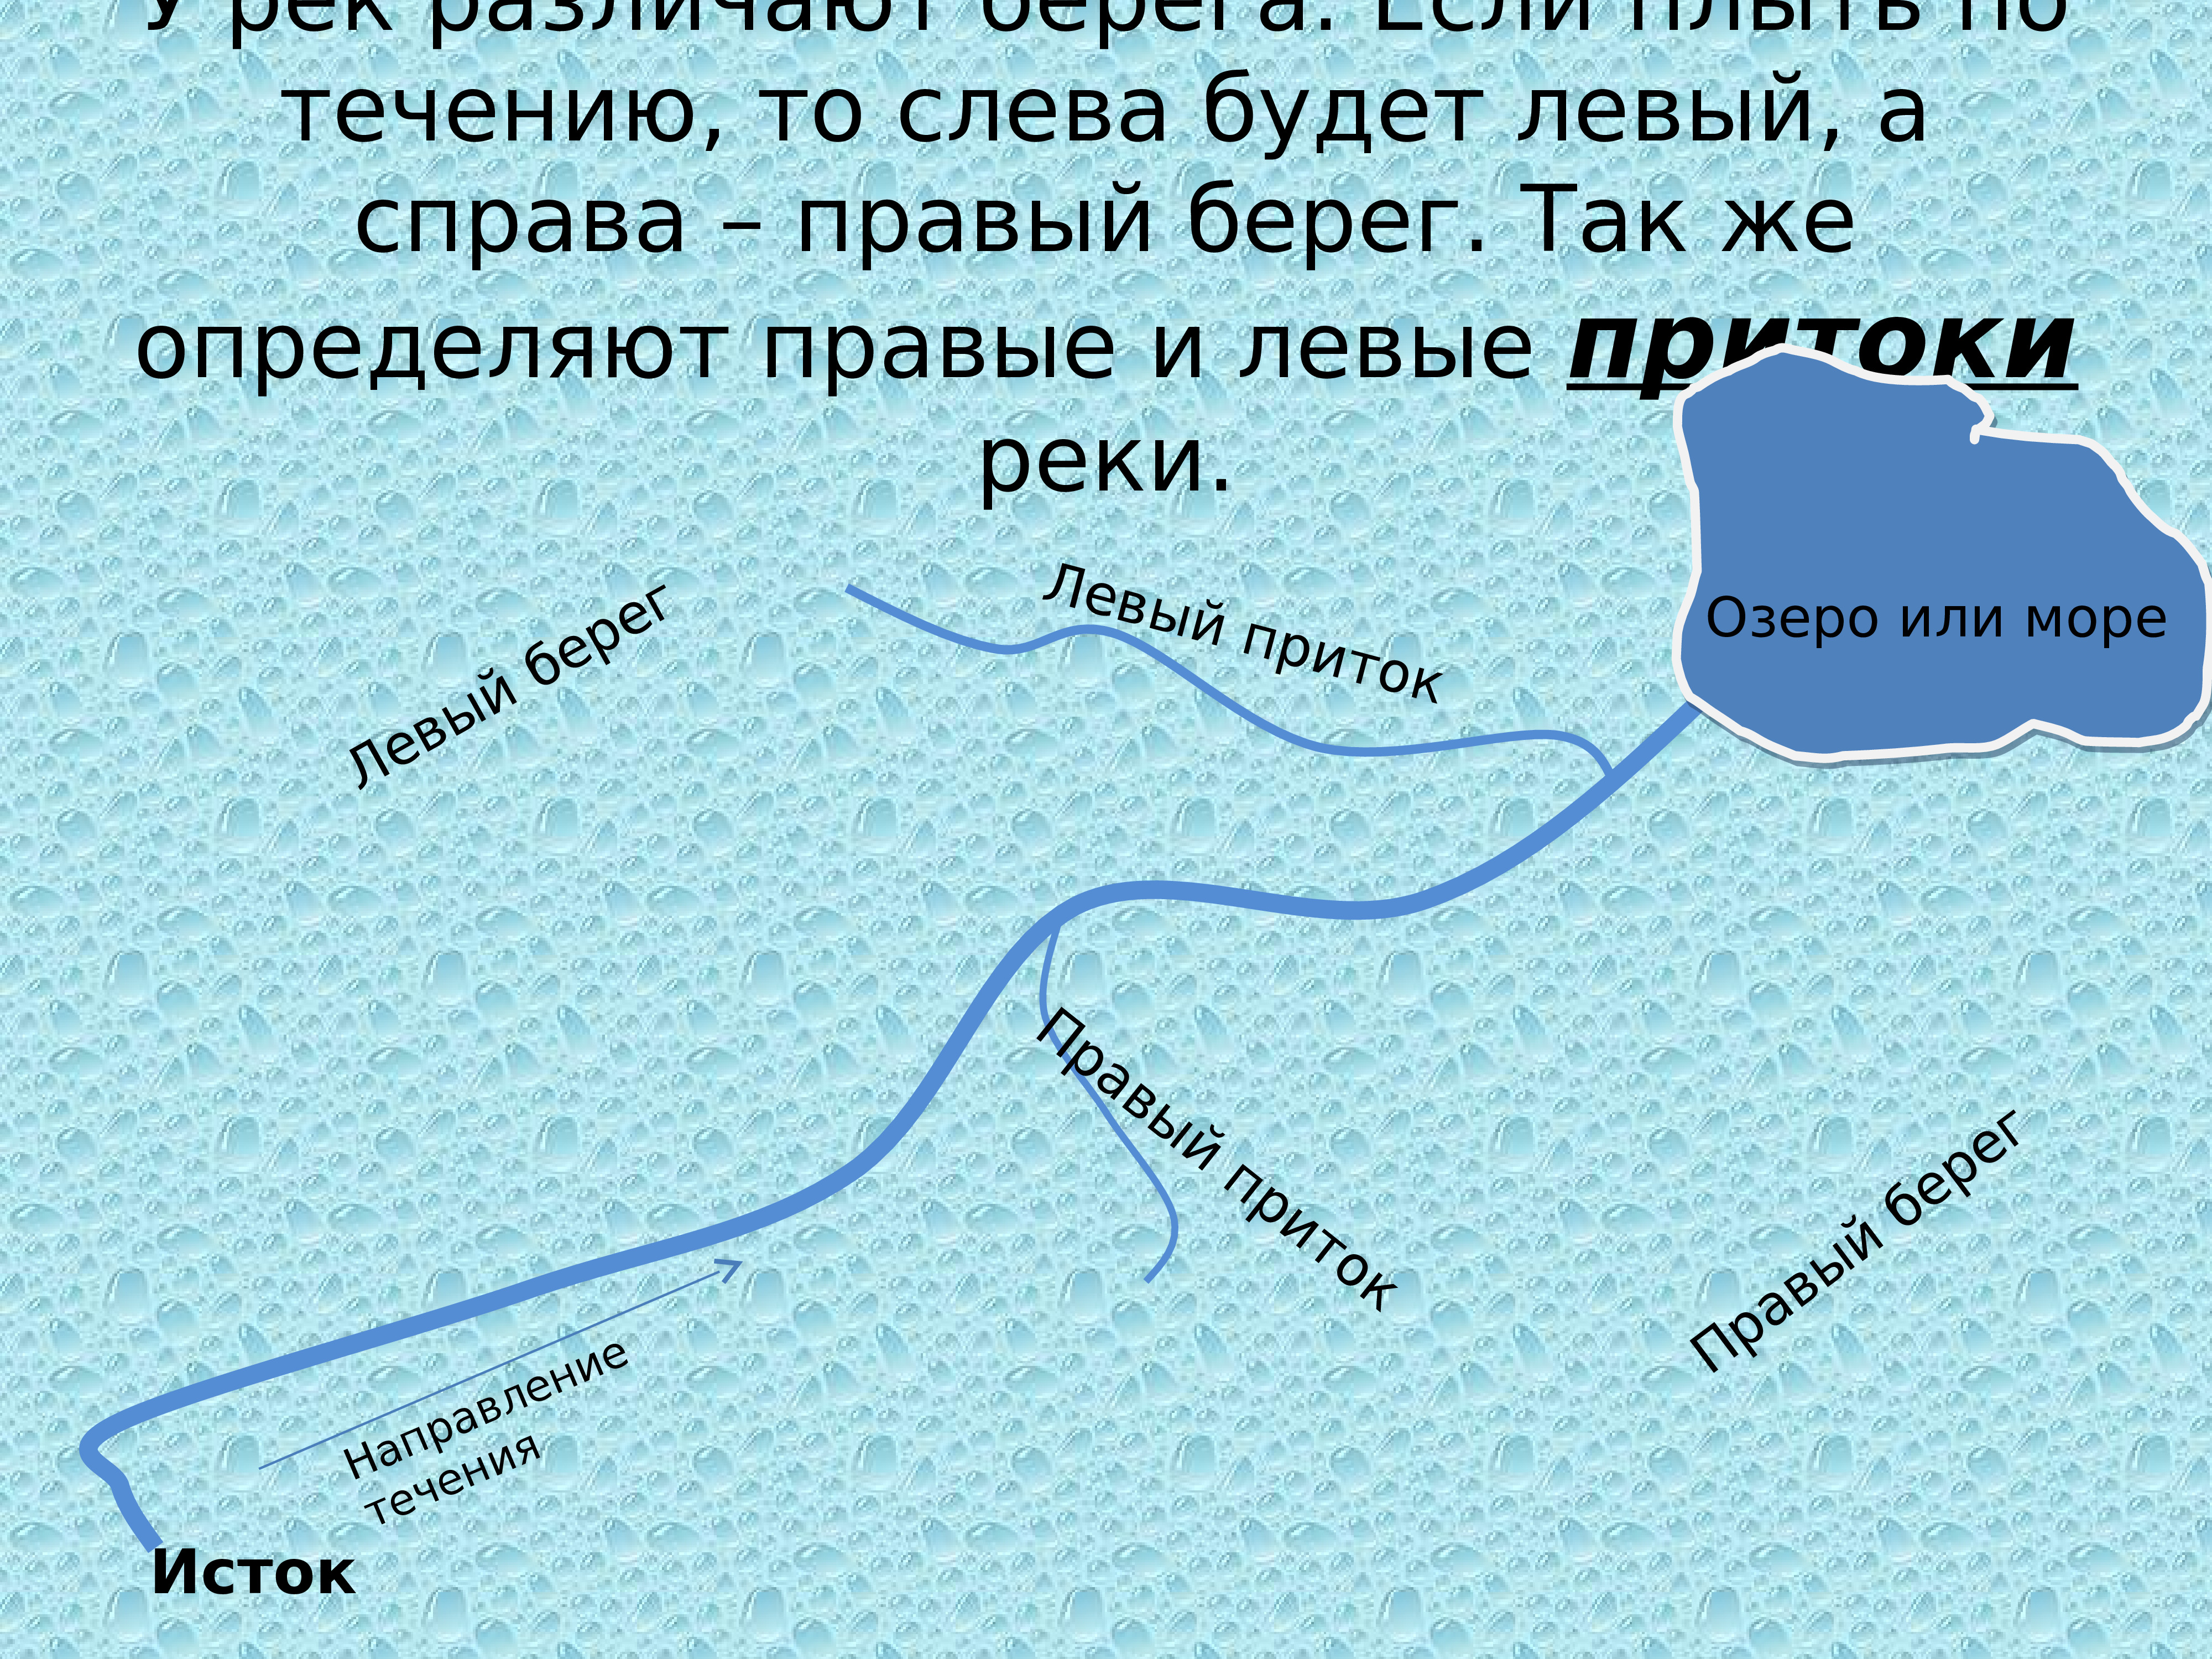 Презентация реки в природе на географических картах